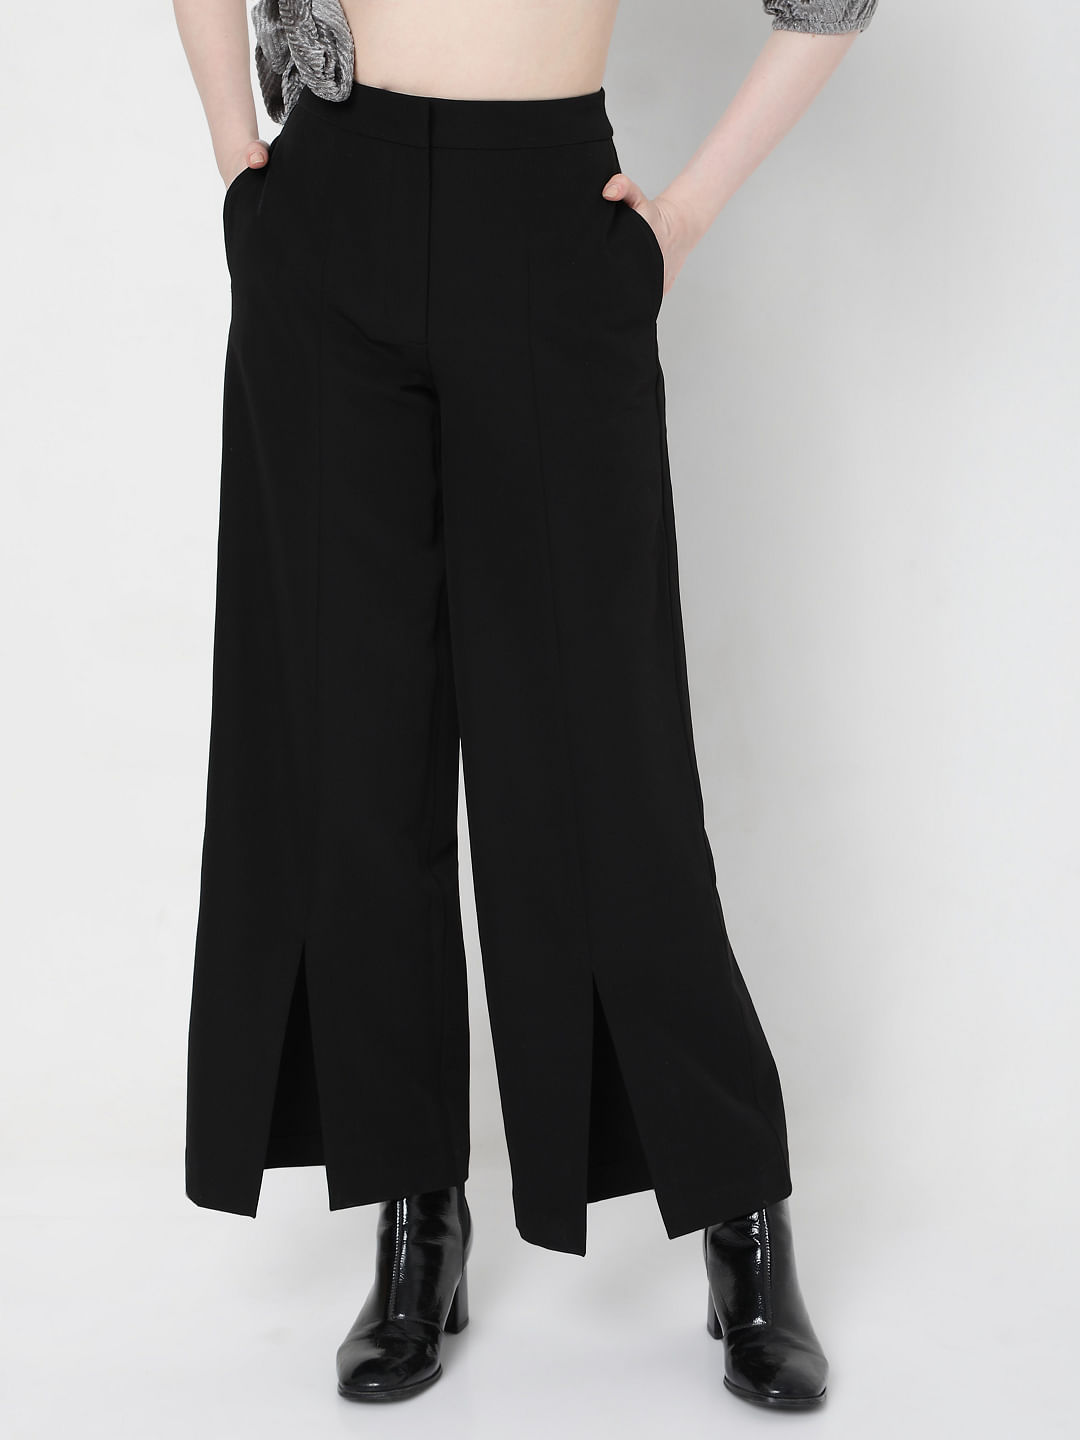 Buy Black Formal Pants for Women Black High Waist Pants for Online in India   Etsy